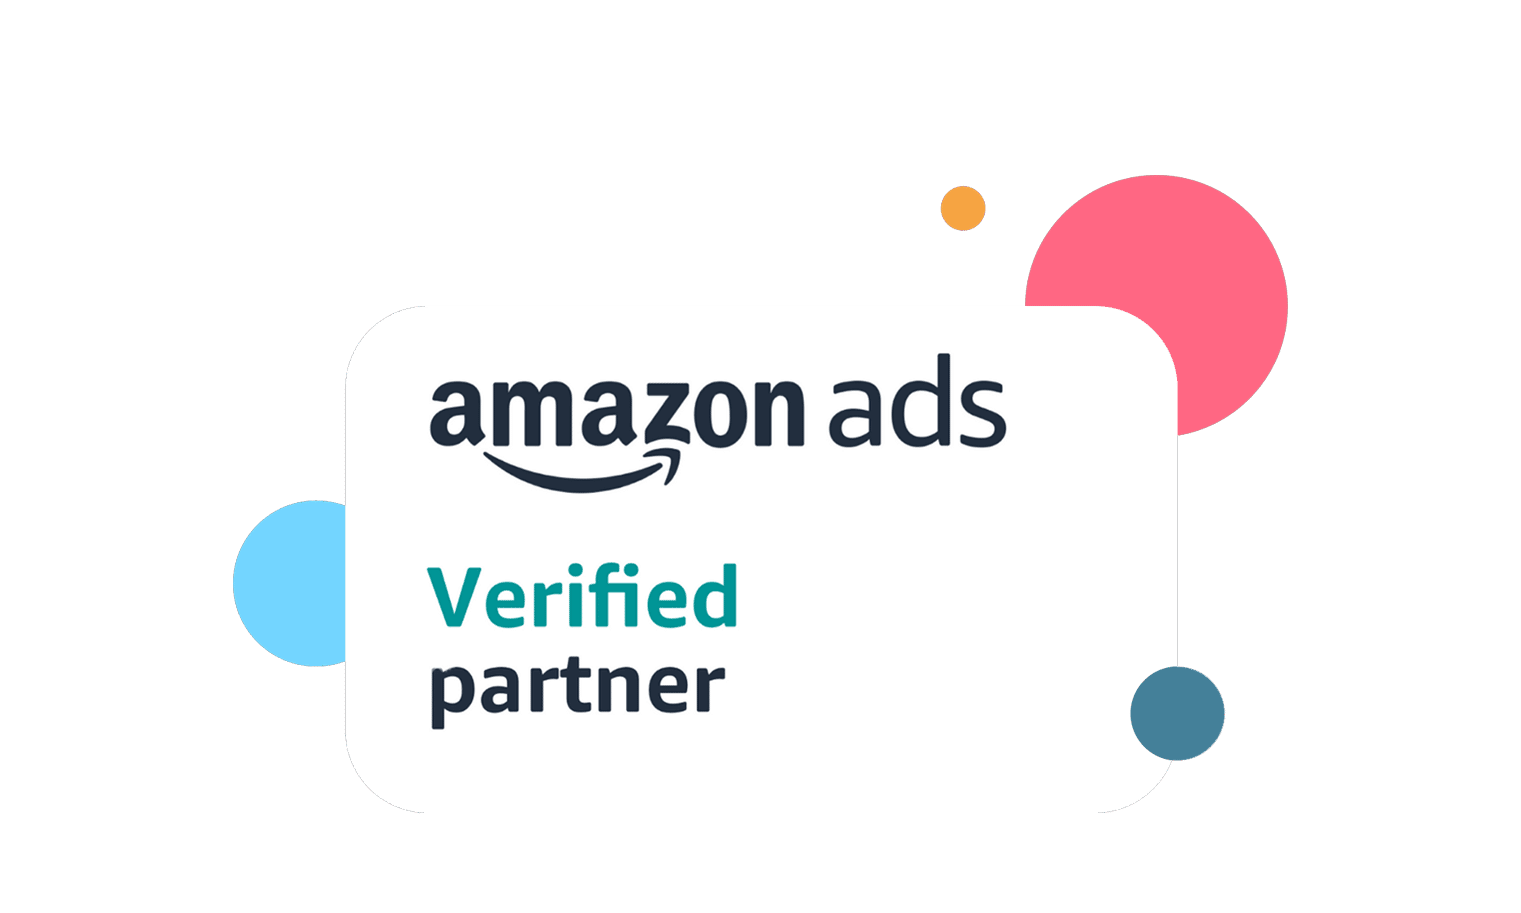 Amazon Ads verified partner badge for Granular